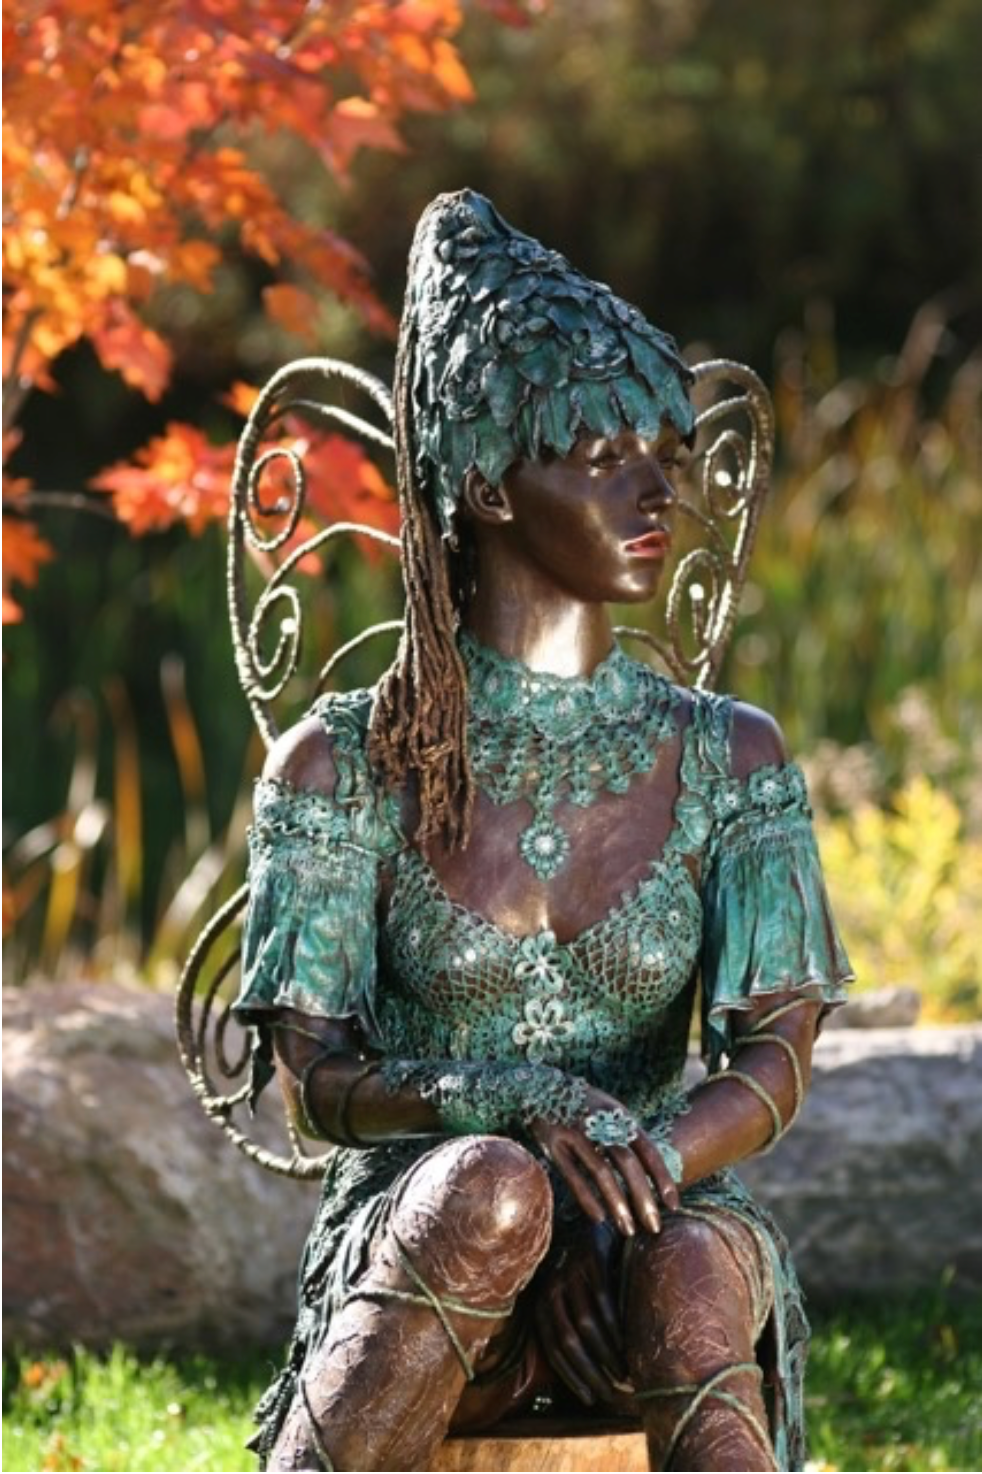 Escultura de jardín de hadas de tamaño natural de Anja Kooistra